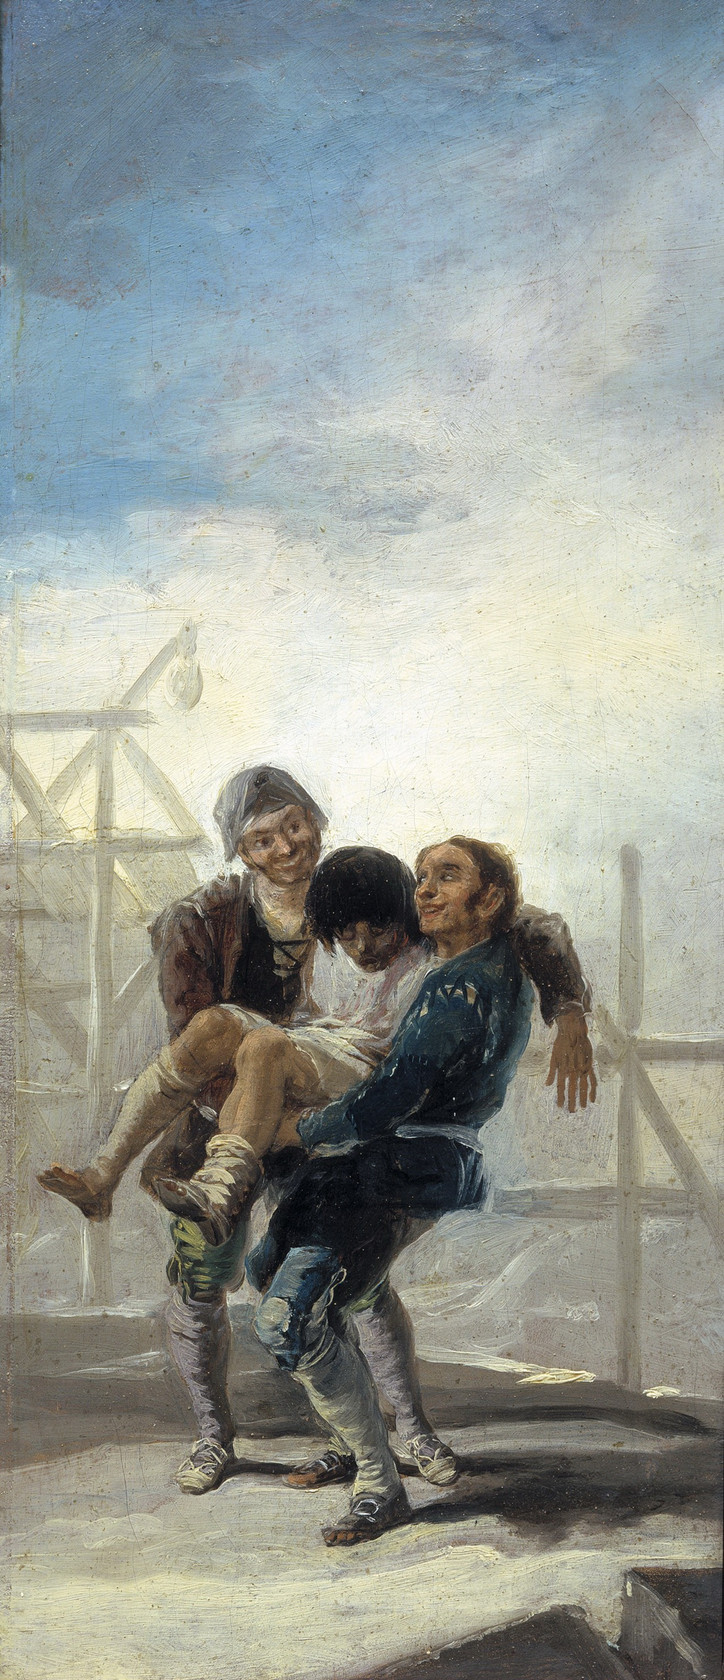 Картина - Пьяный Каменщик, 1786